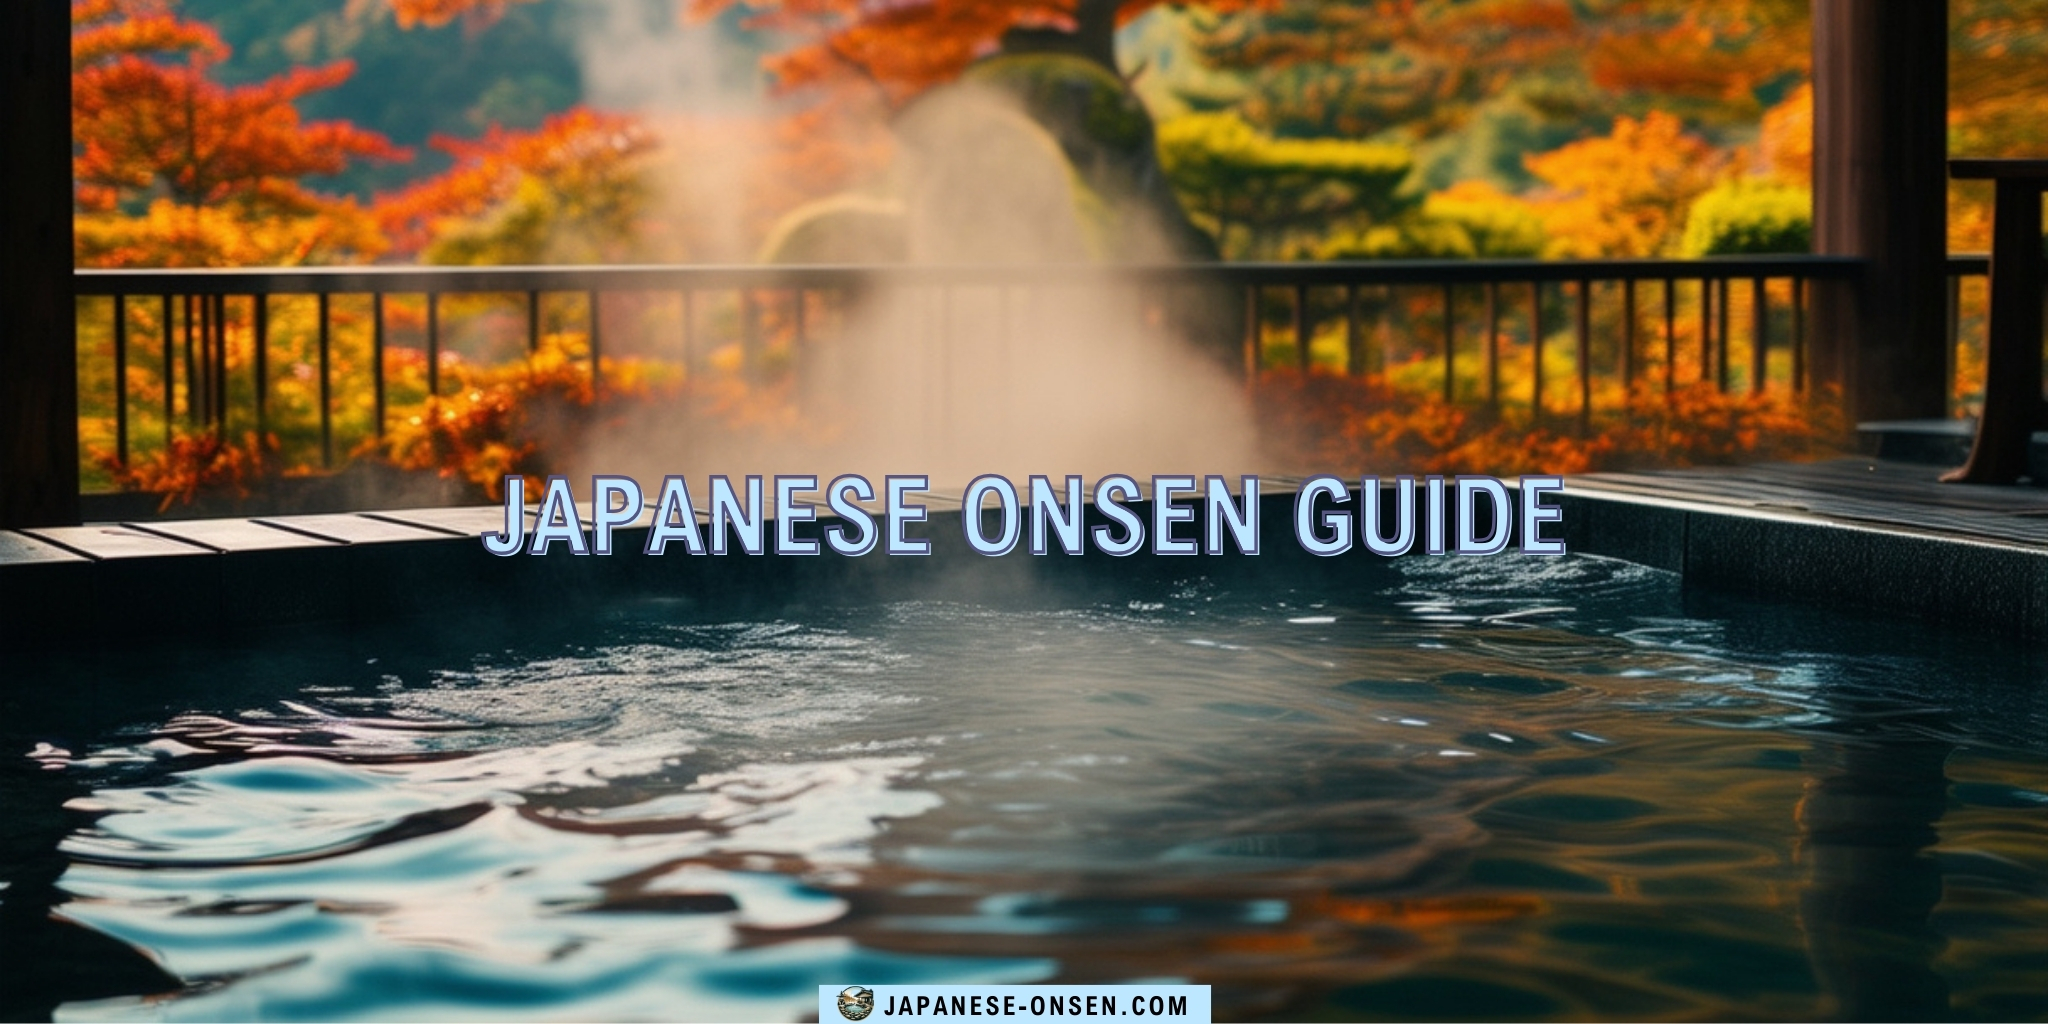 Japanese onsen guide